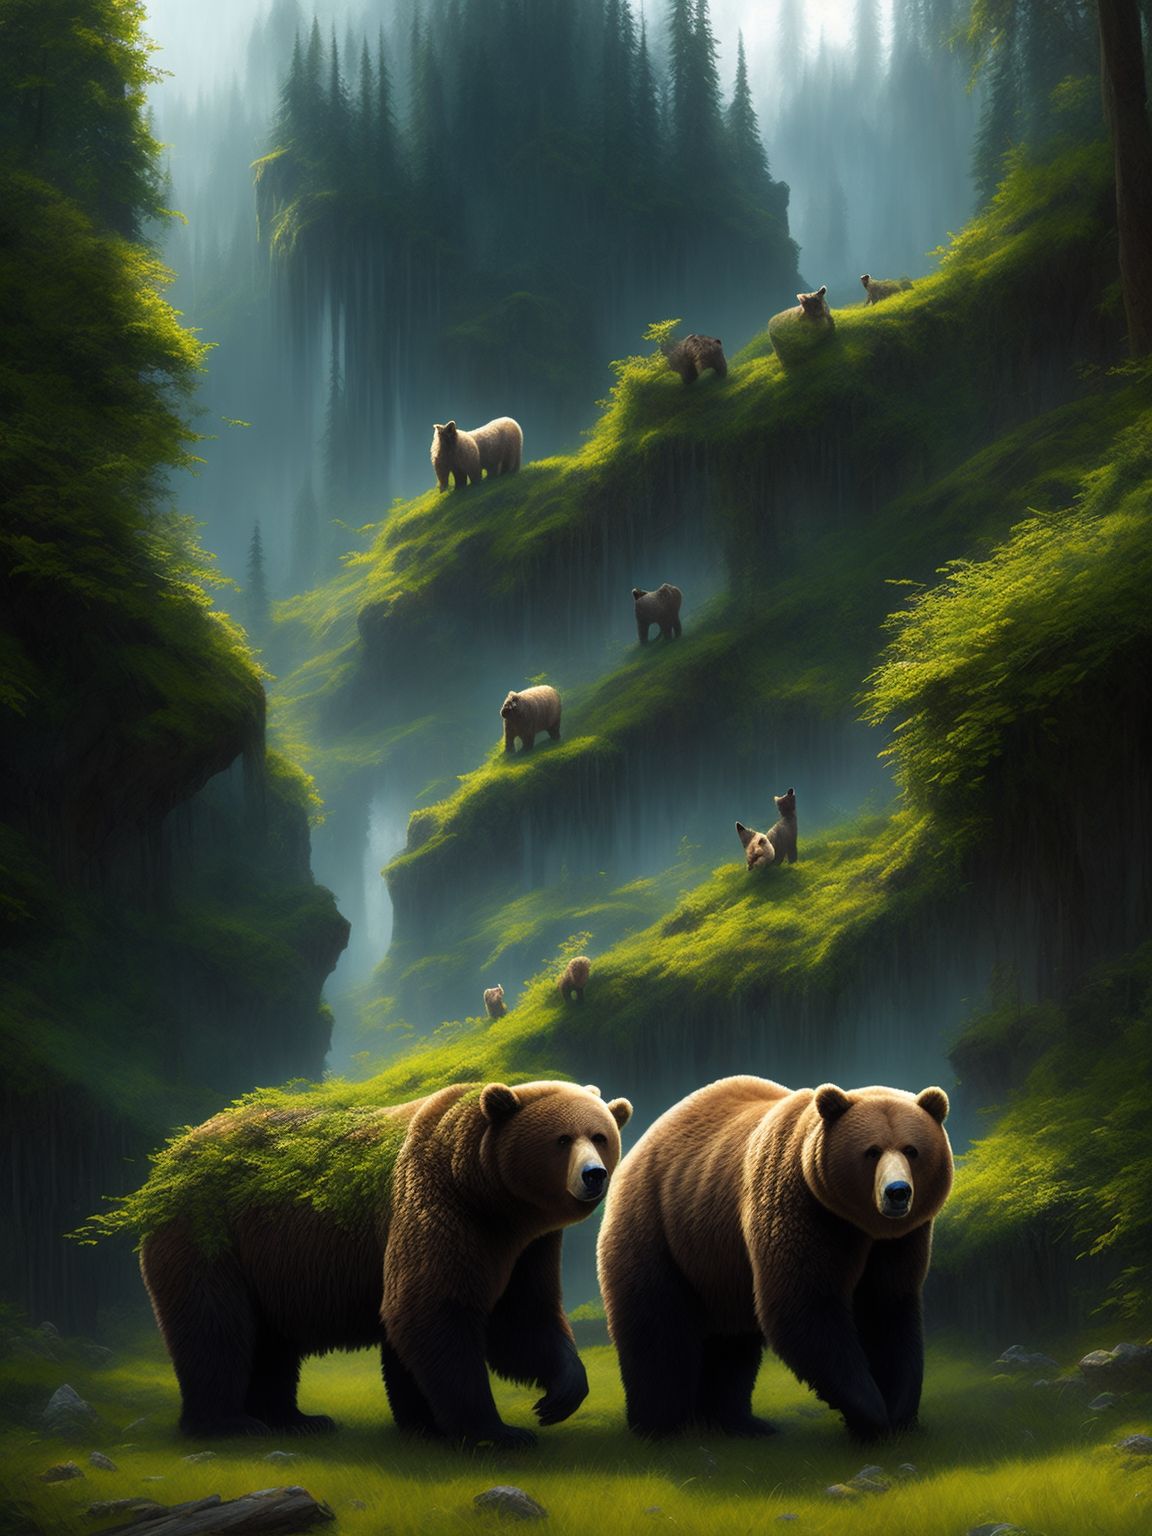 Super Bear Adventure added a new photo. - Super Bear Adventure